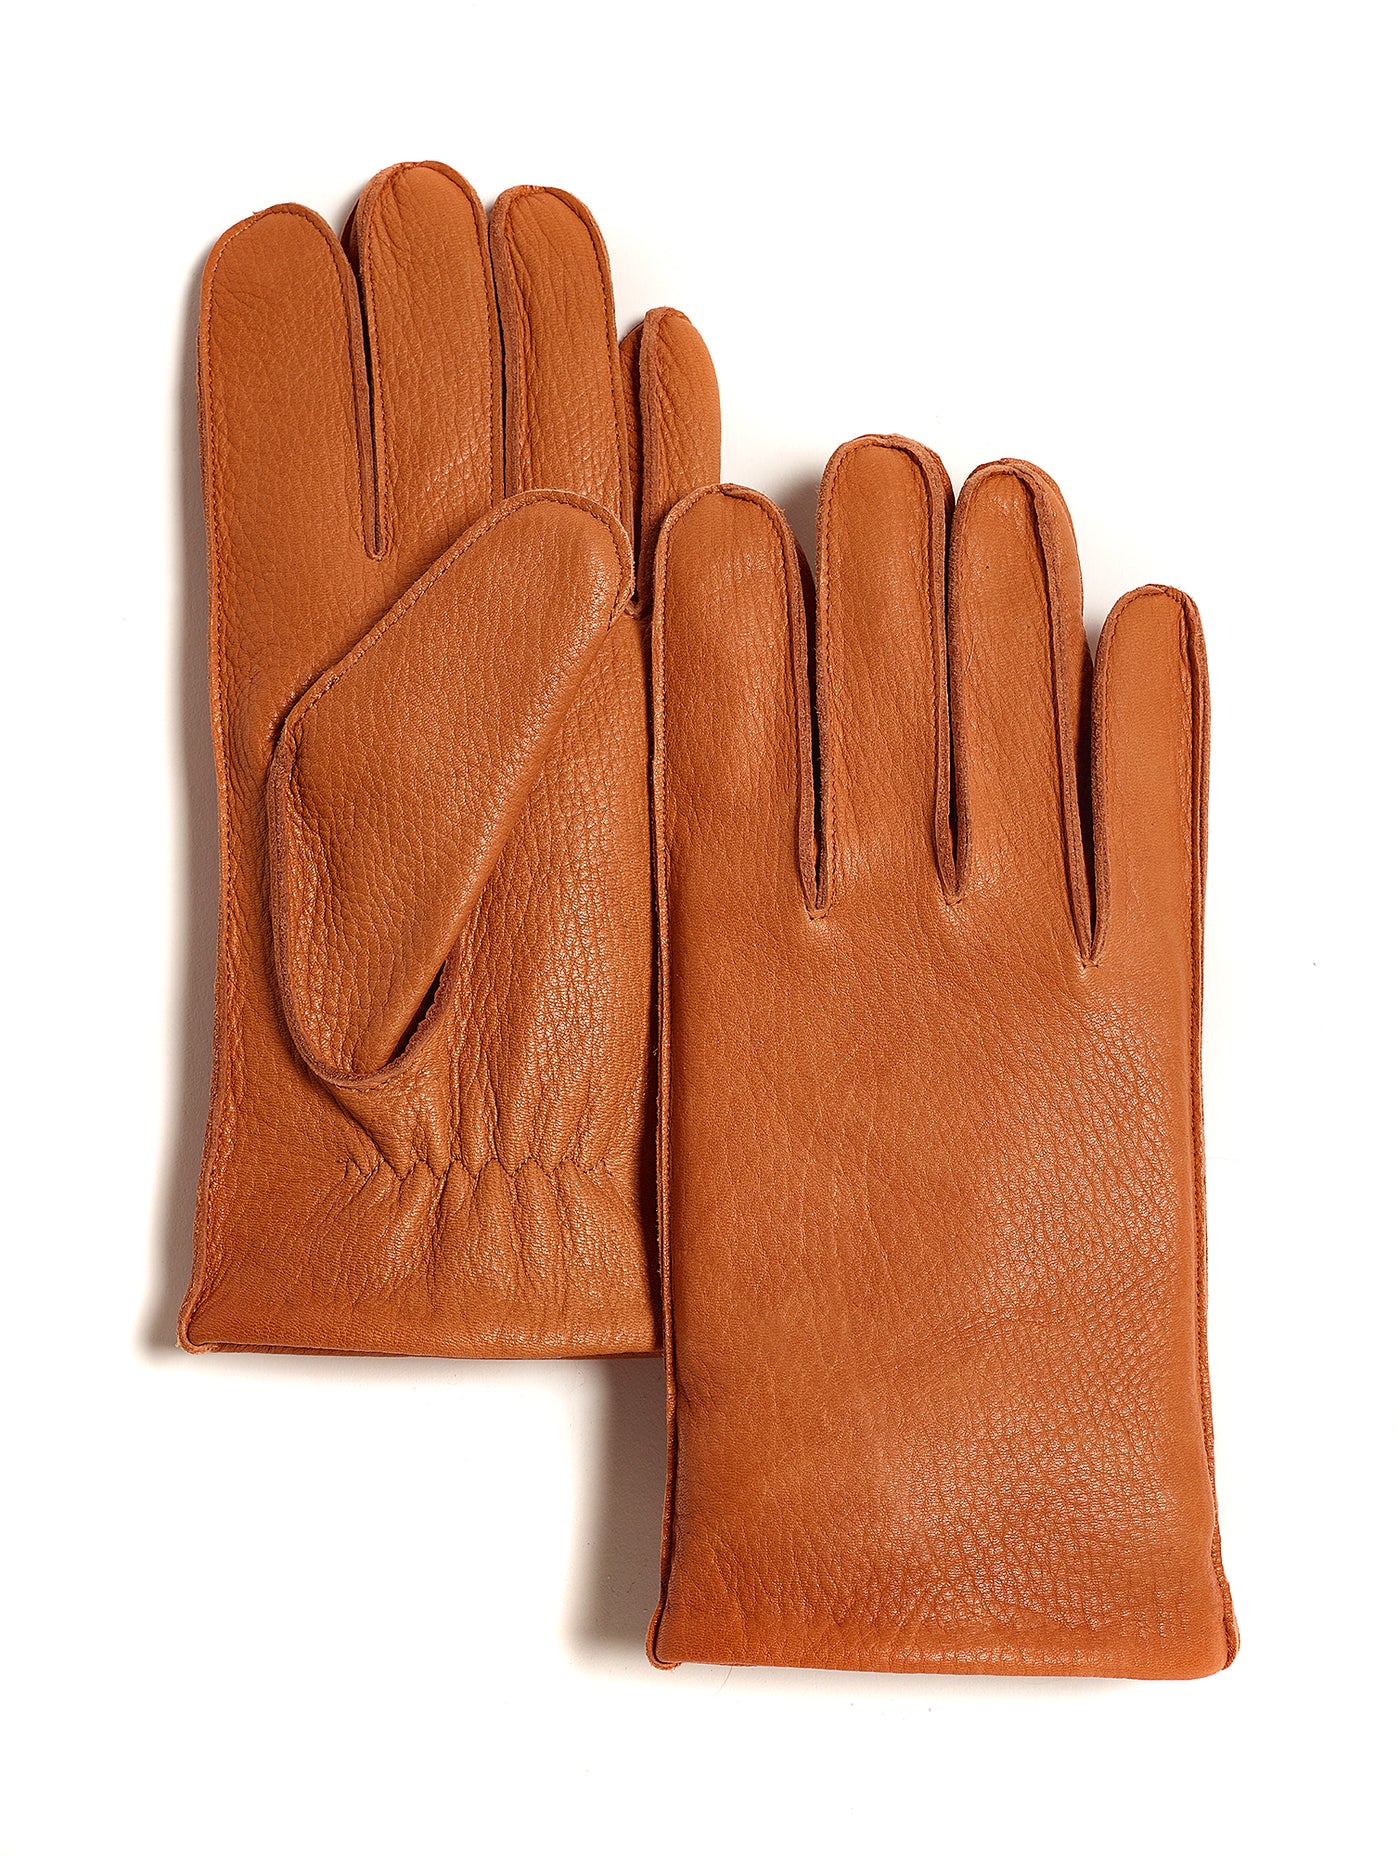 The Caribou Glove